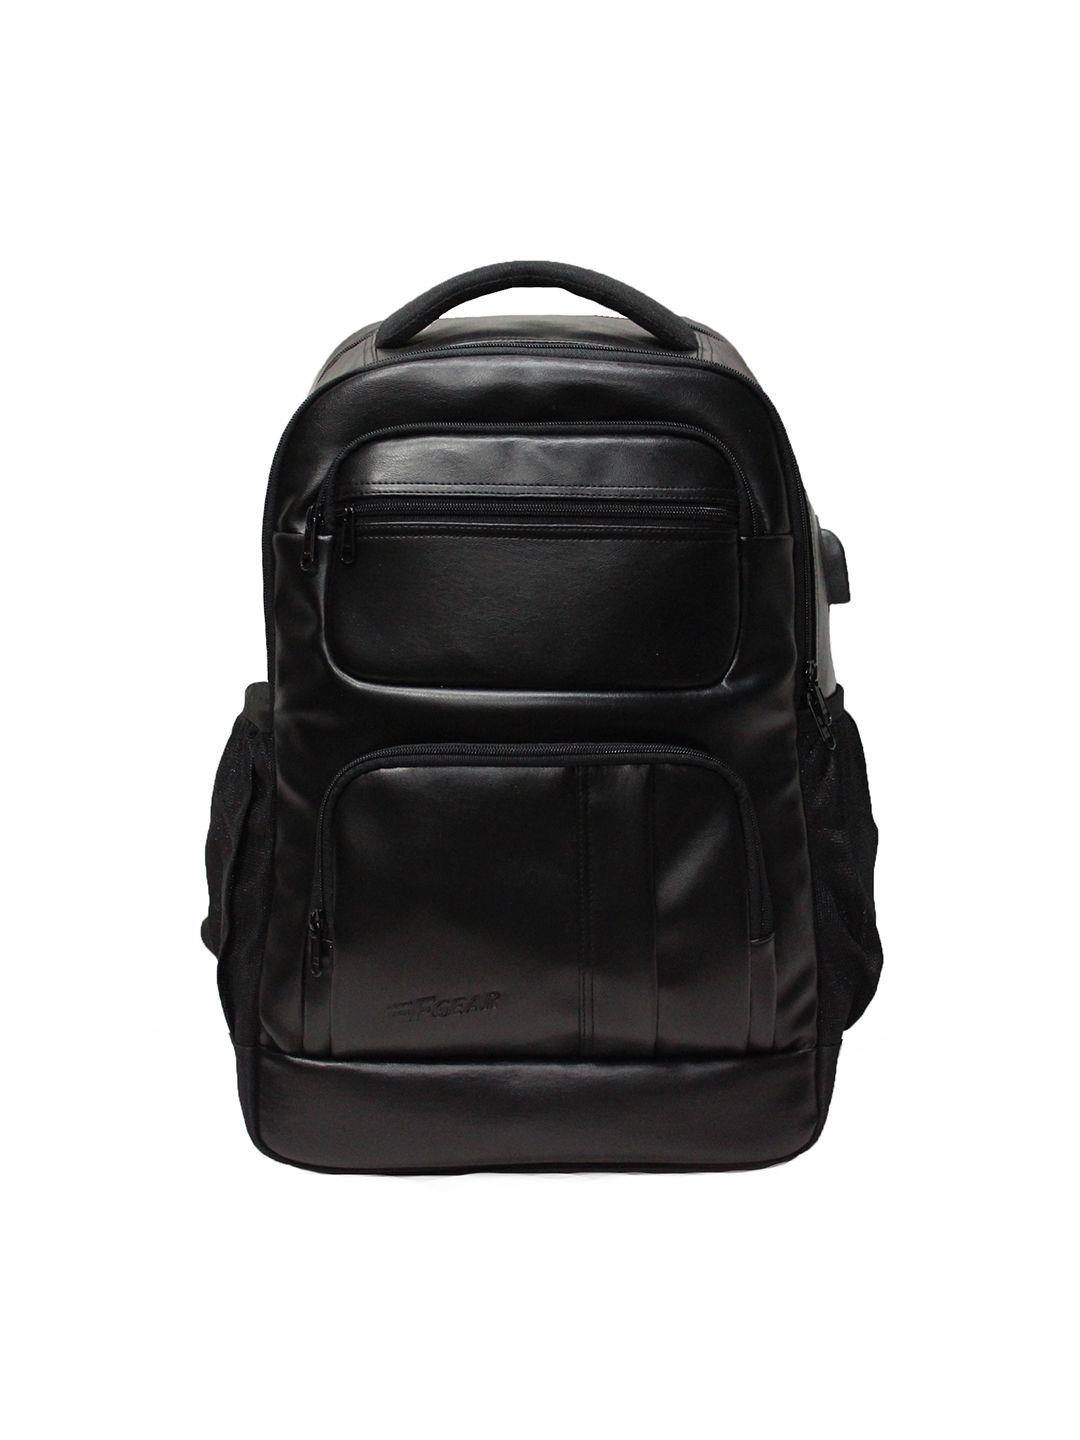 f gear unisex black backpack